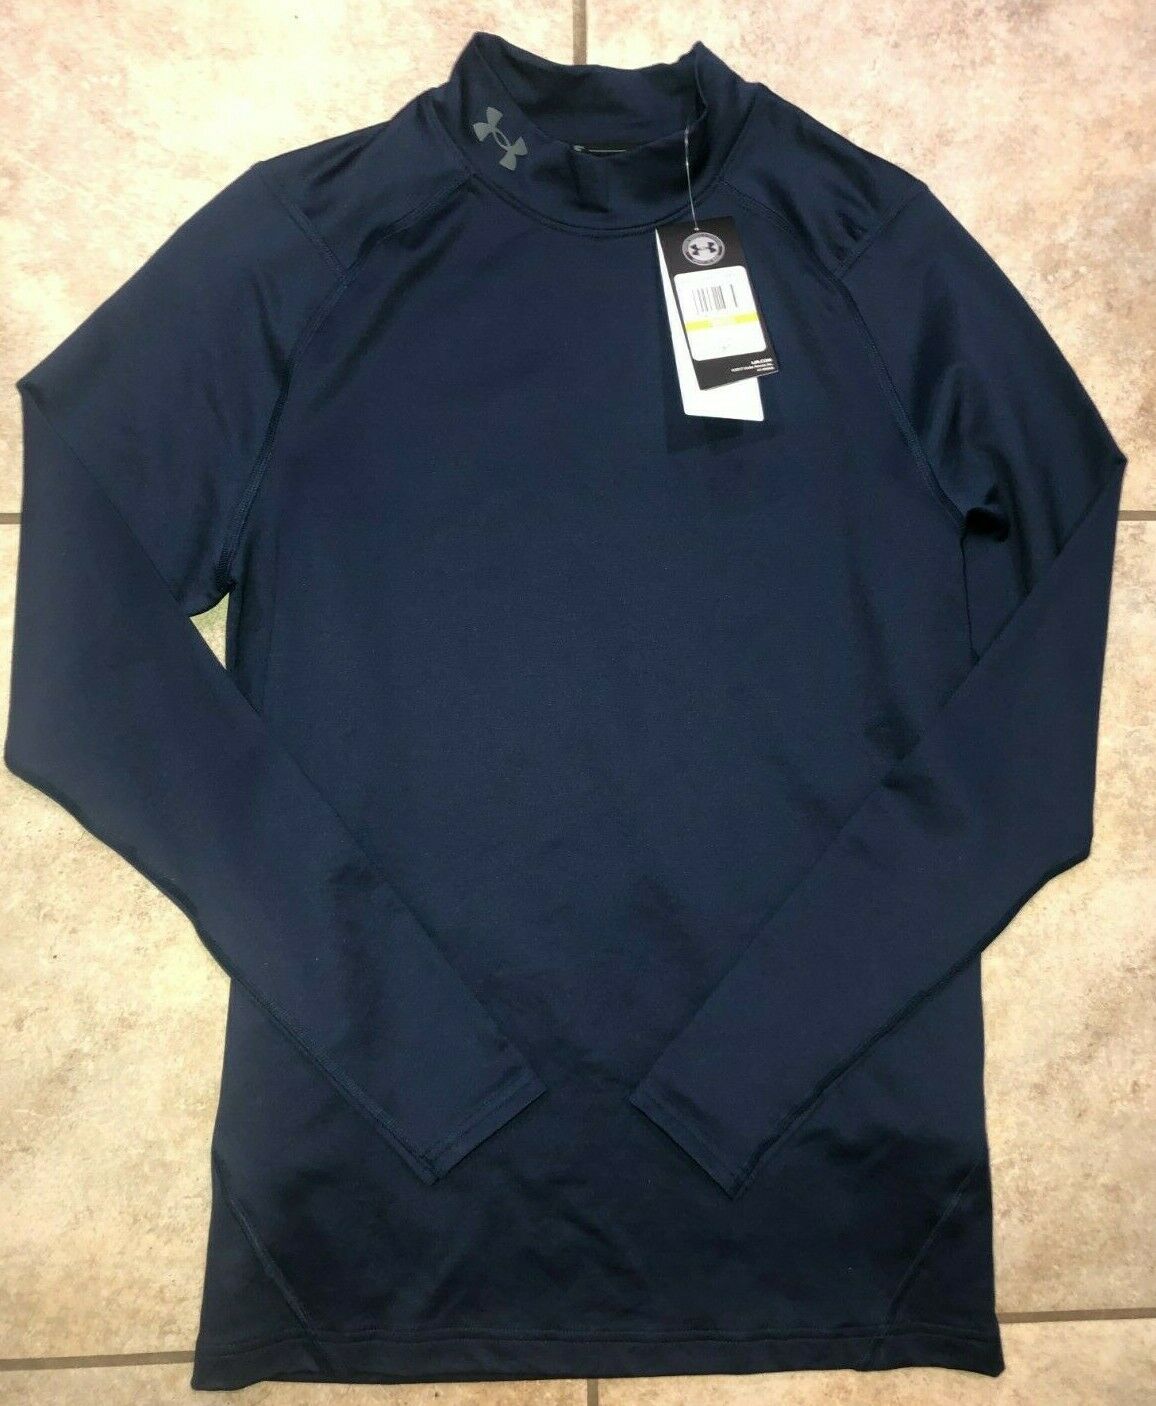 Mens Under Armour Coldgear Infrared Long Sleeve Golf Shirt 1356663 Sz S Nwt $70